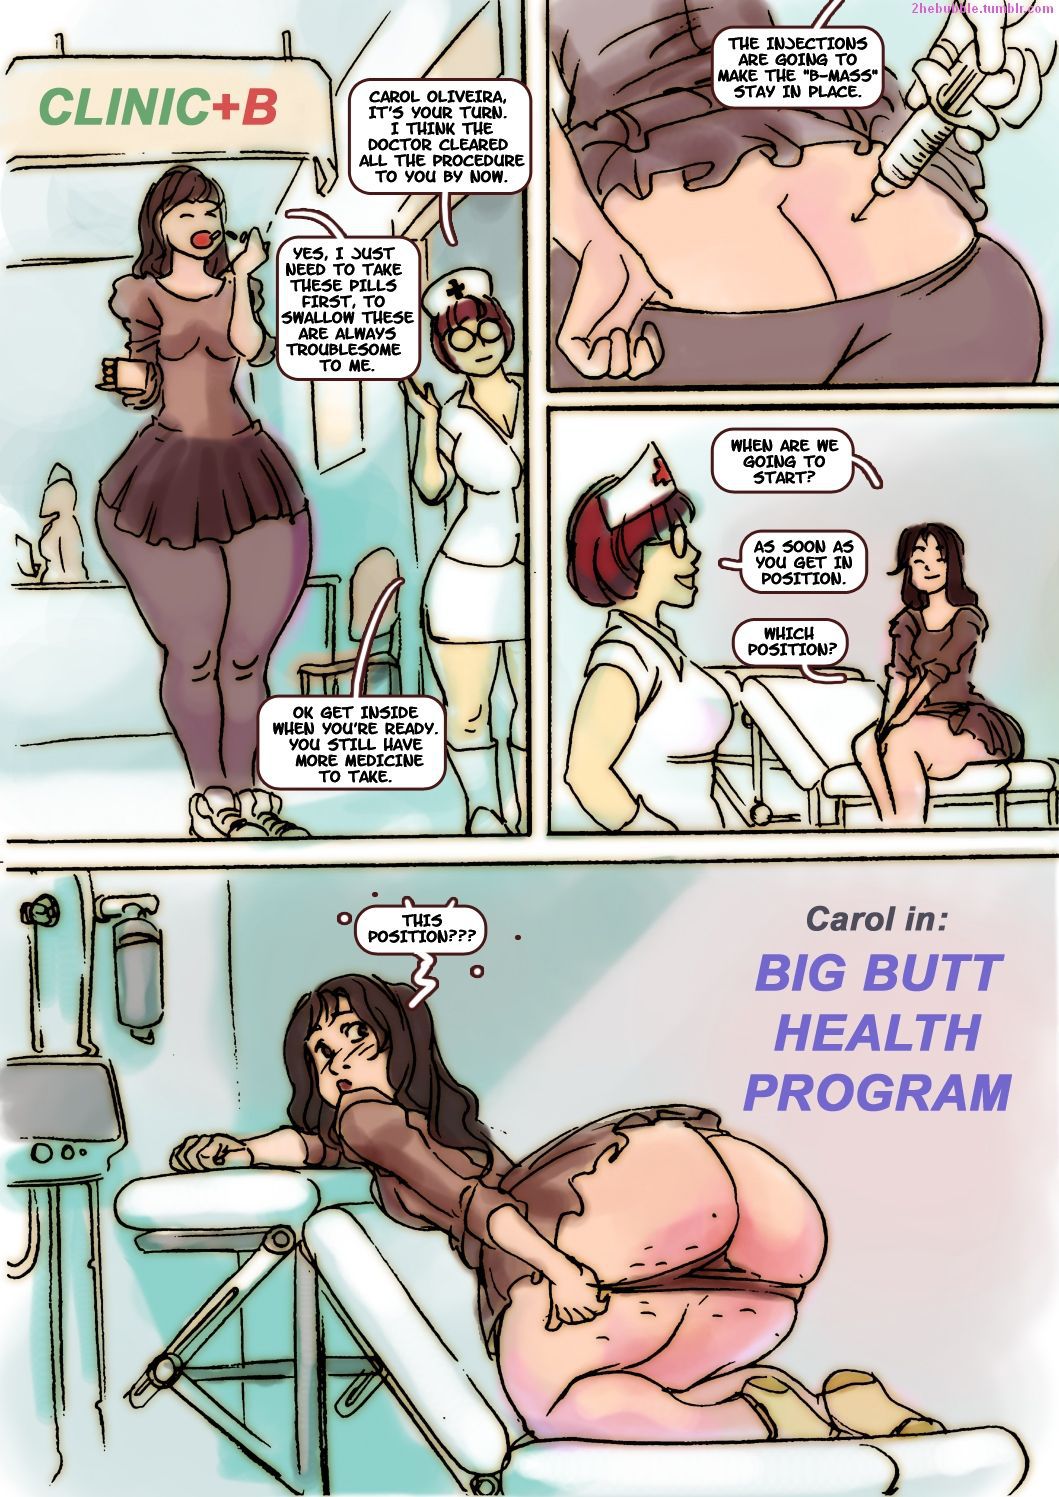 [sidneymt] Carol Big Butt Health Program [Ongoing] 1